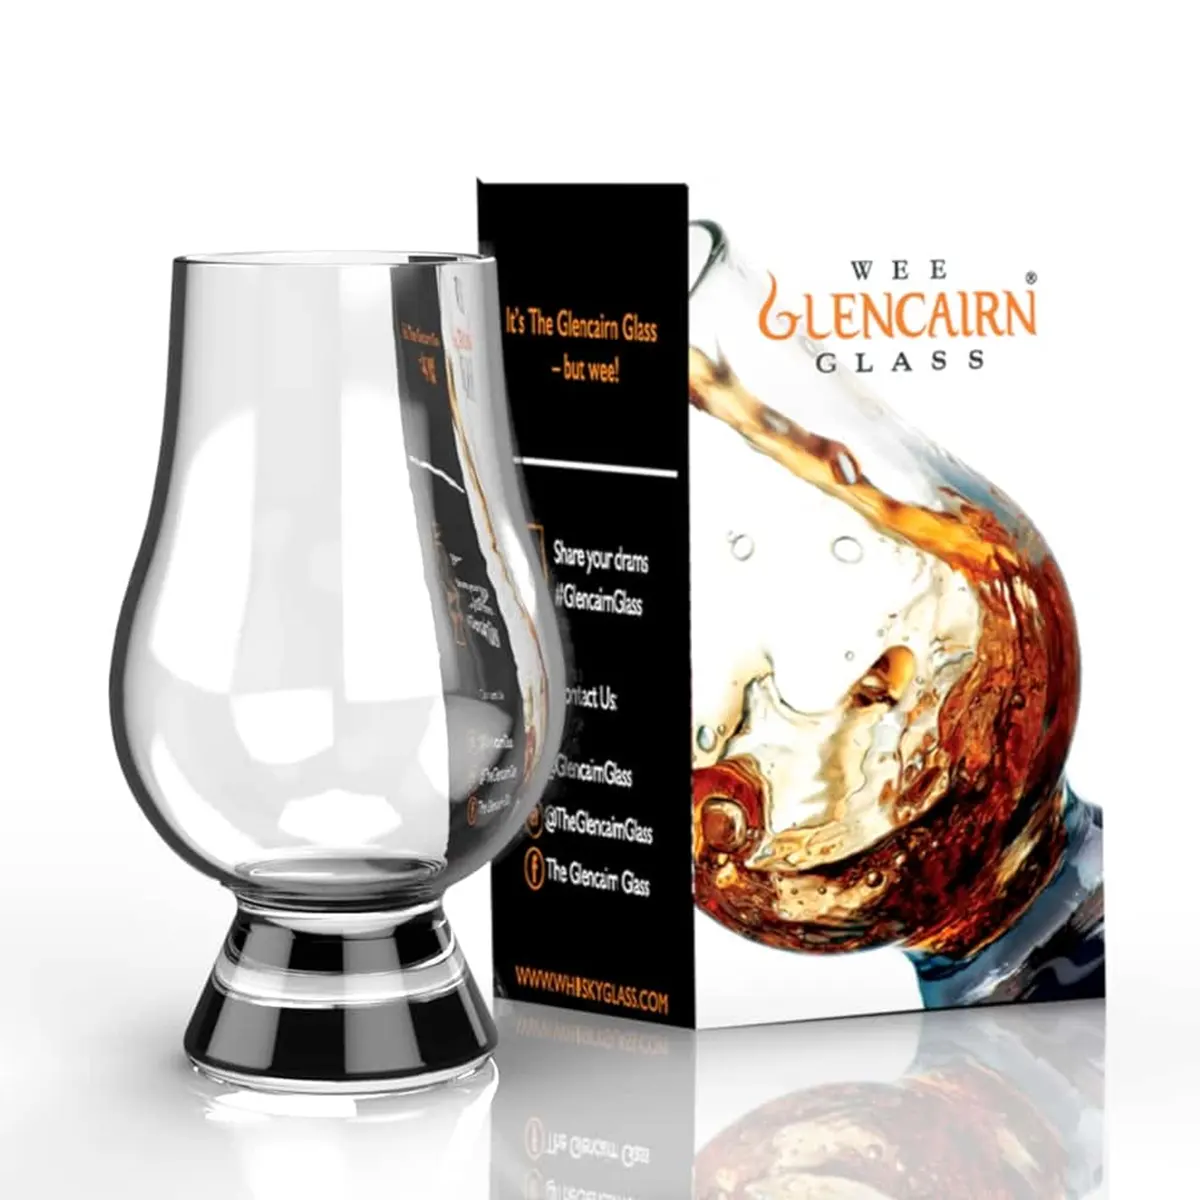 Wee Glencairn Glass - Mini Whisky Tasting Glas aus Schottland